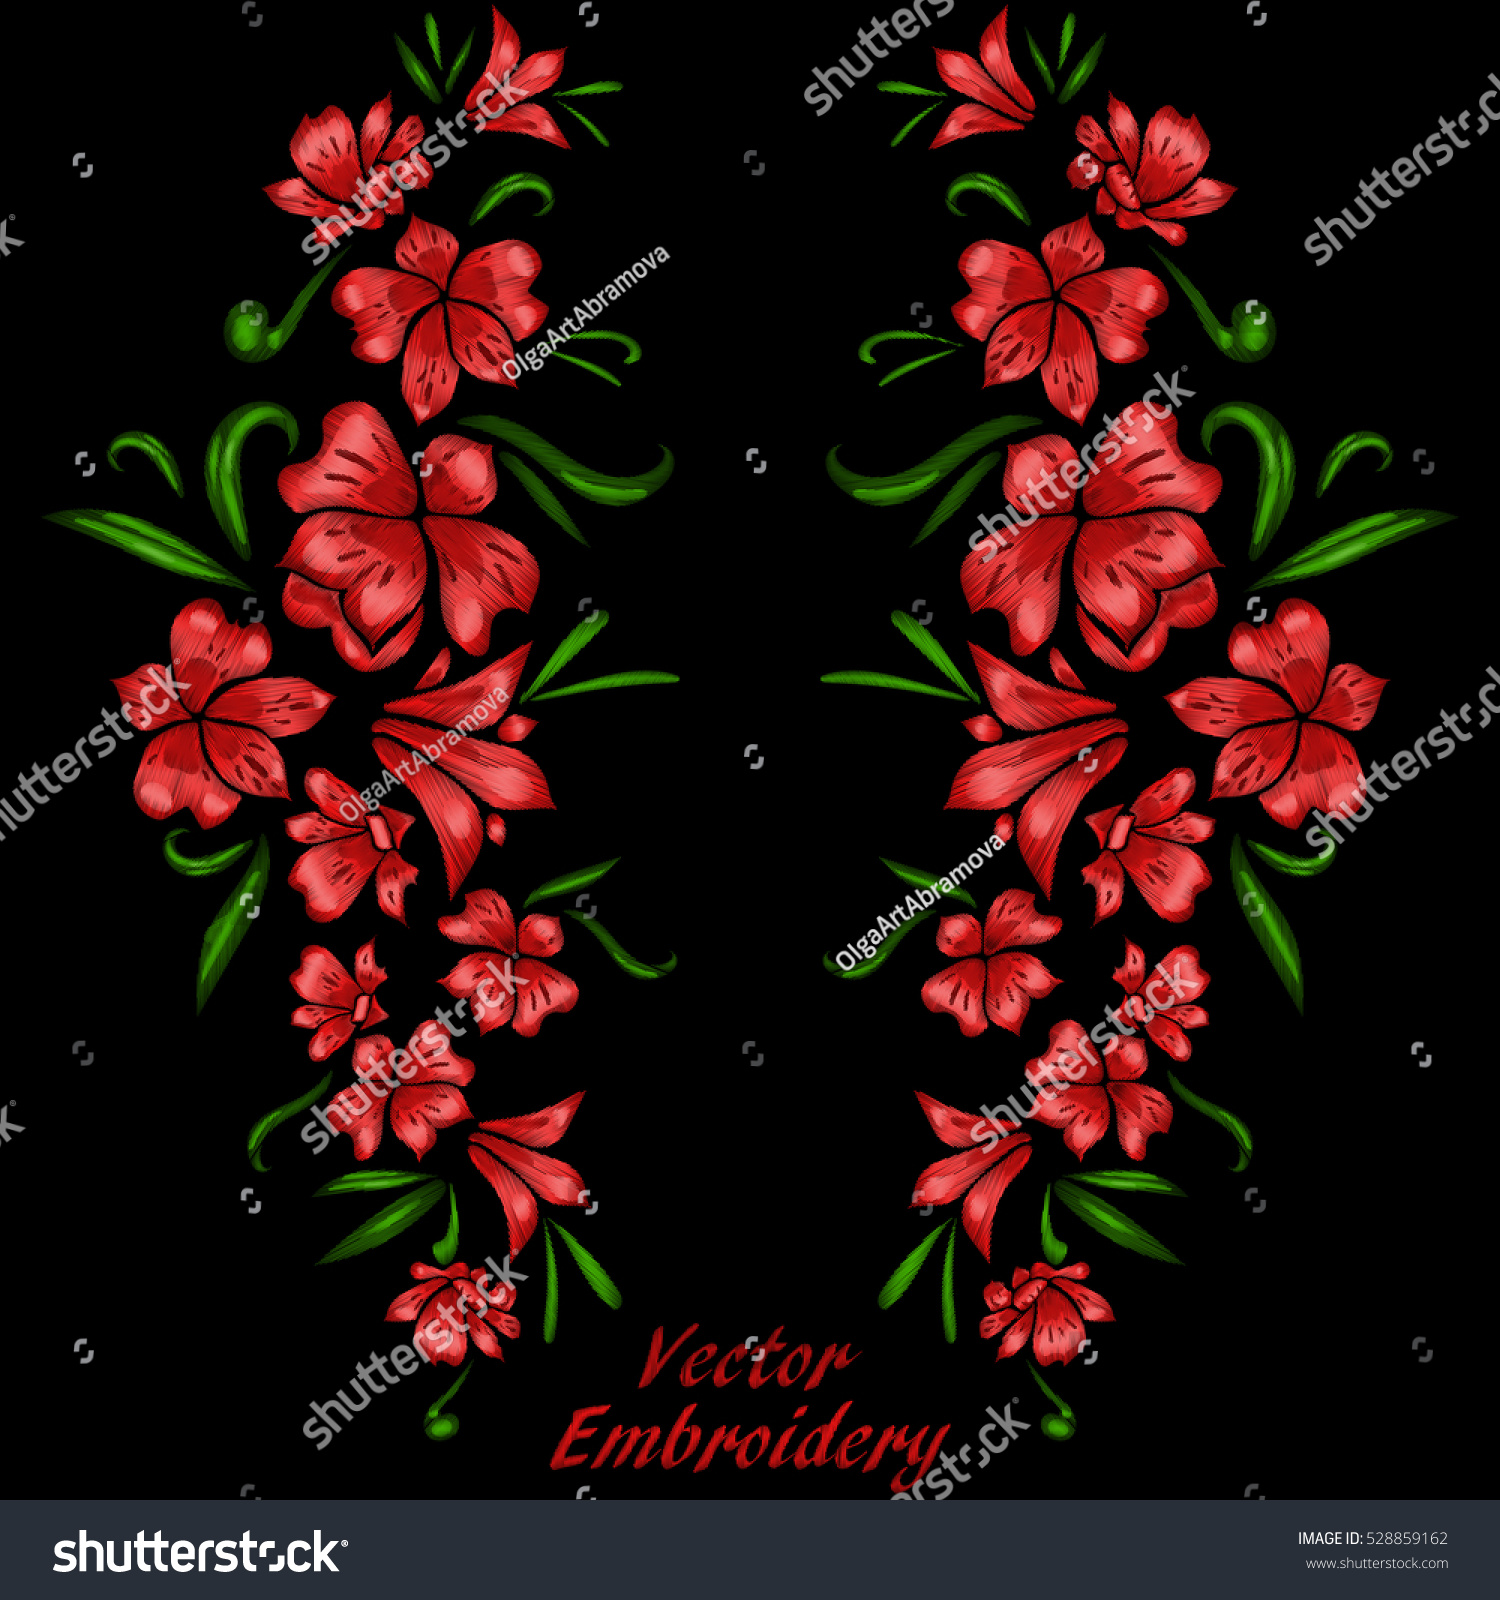 Embroidery Flowers Vector Stock Vector 528859162 - Shutterstock